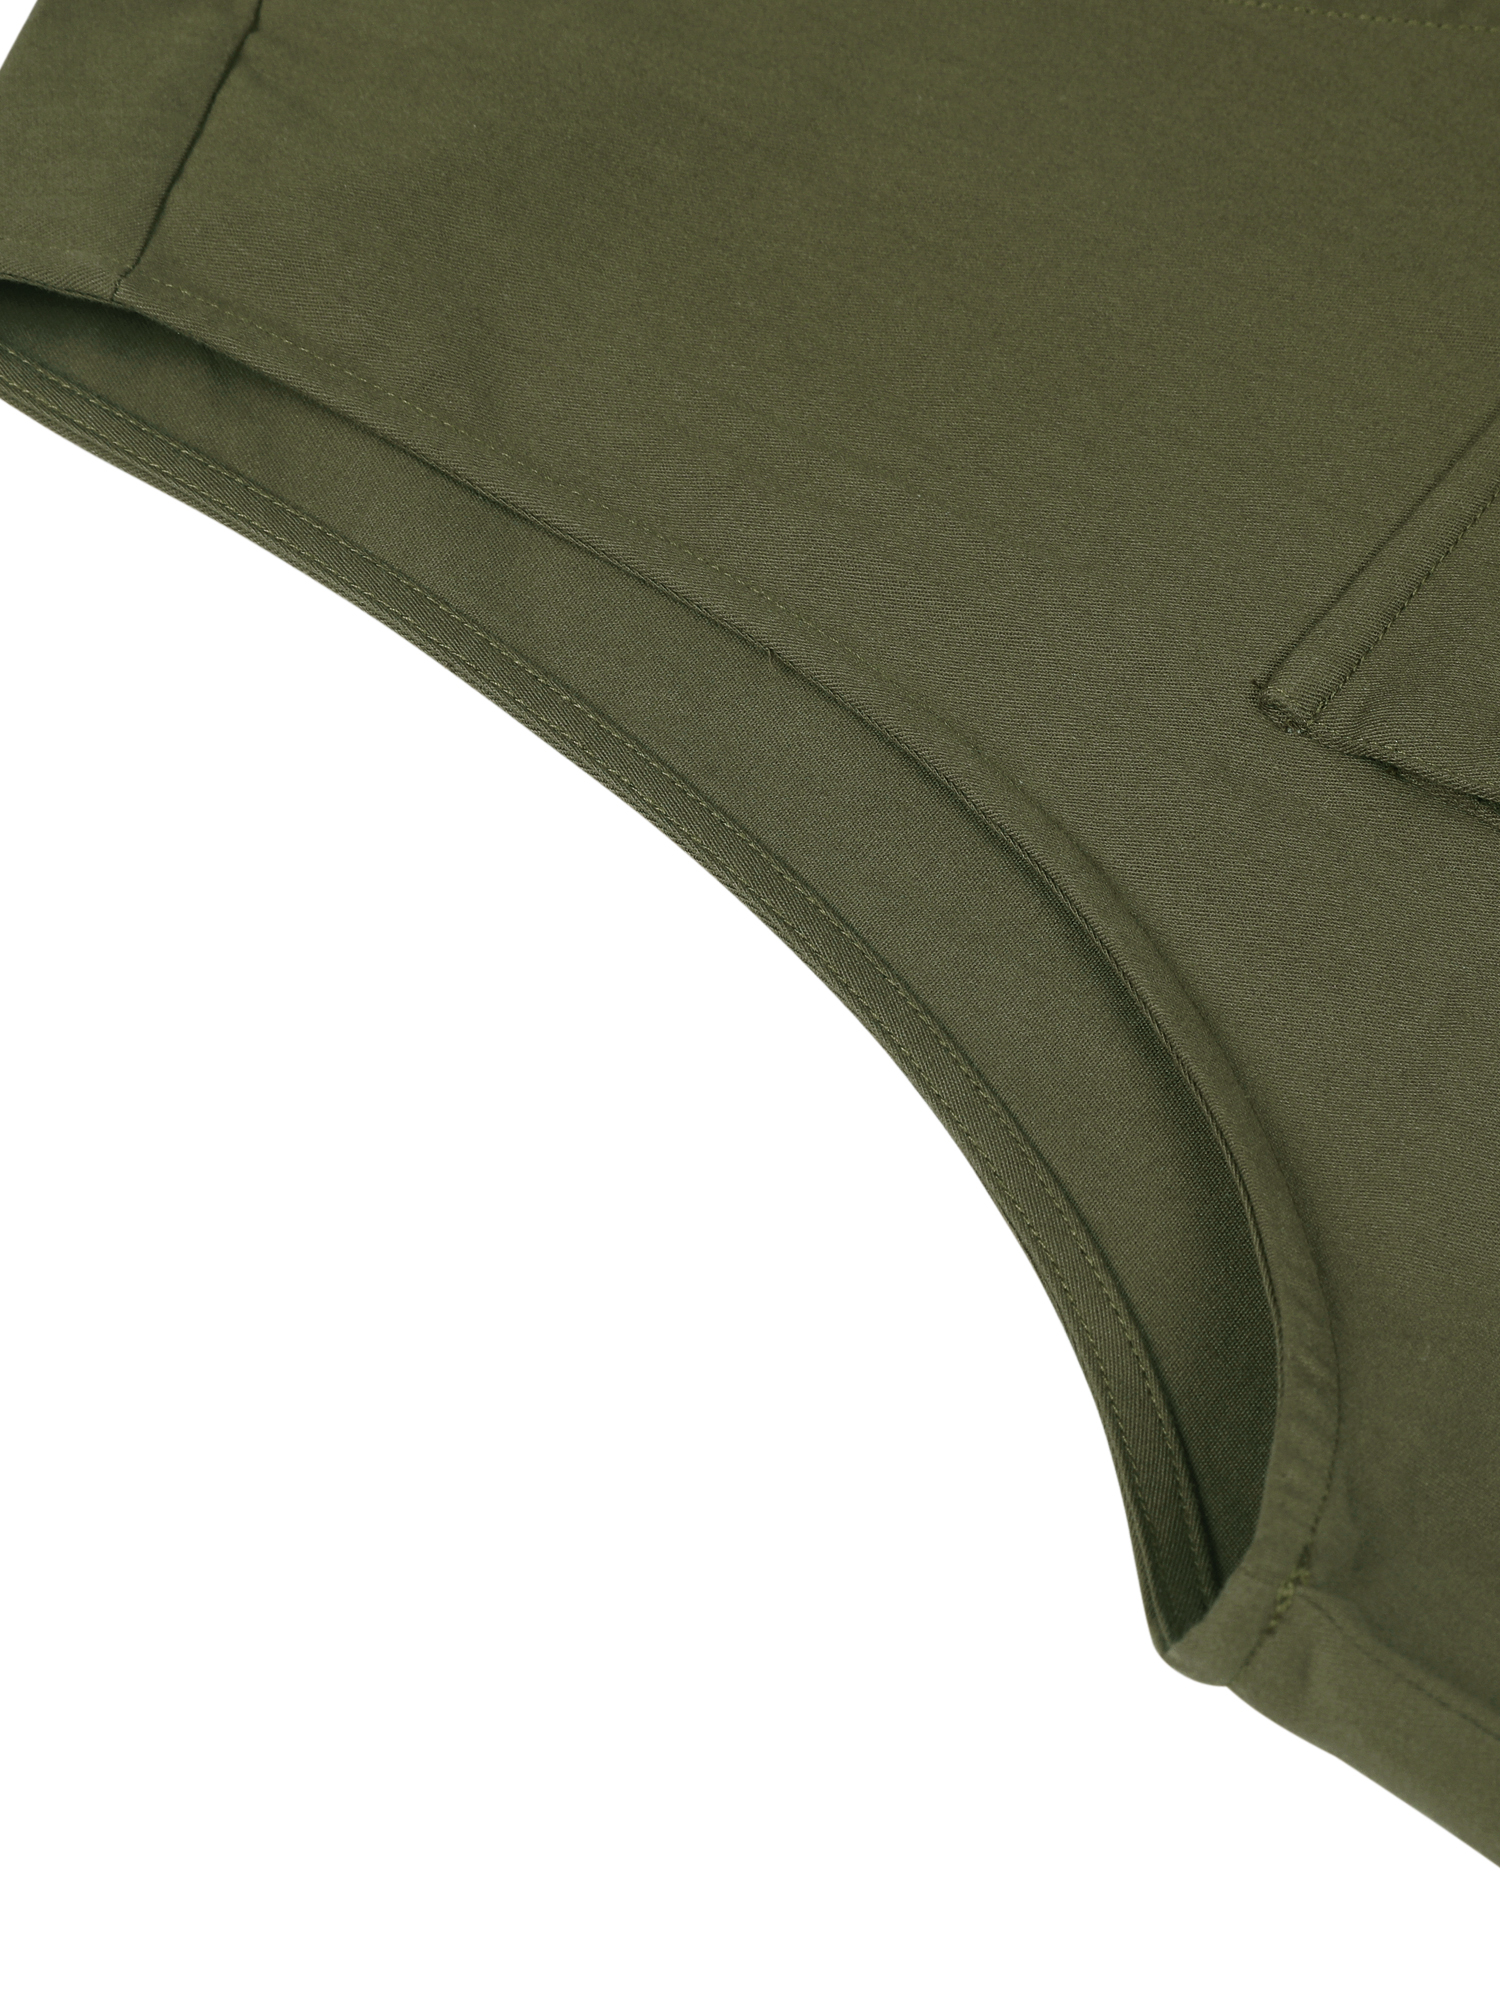 MODA NOVA Big & Tall Men's Waistcoats Casual Cotton Sleeveless Pockets Button Down V Neck Cargo Vests Green LT - image 5 of 5